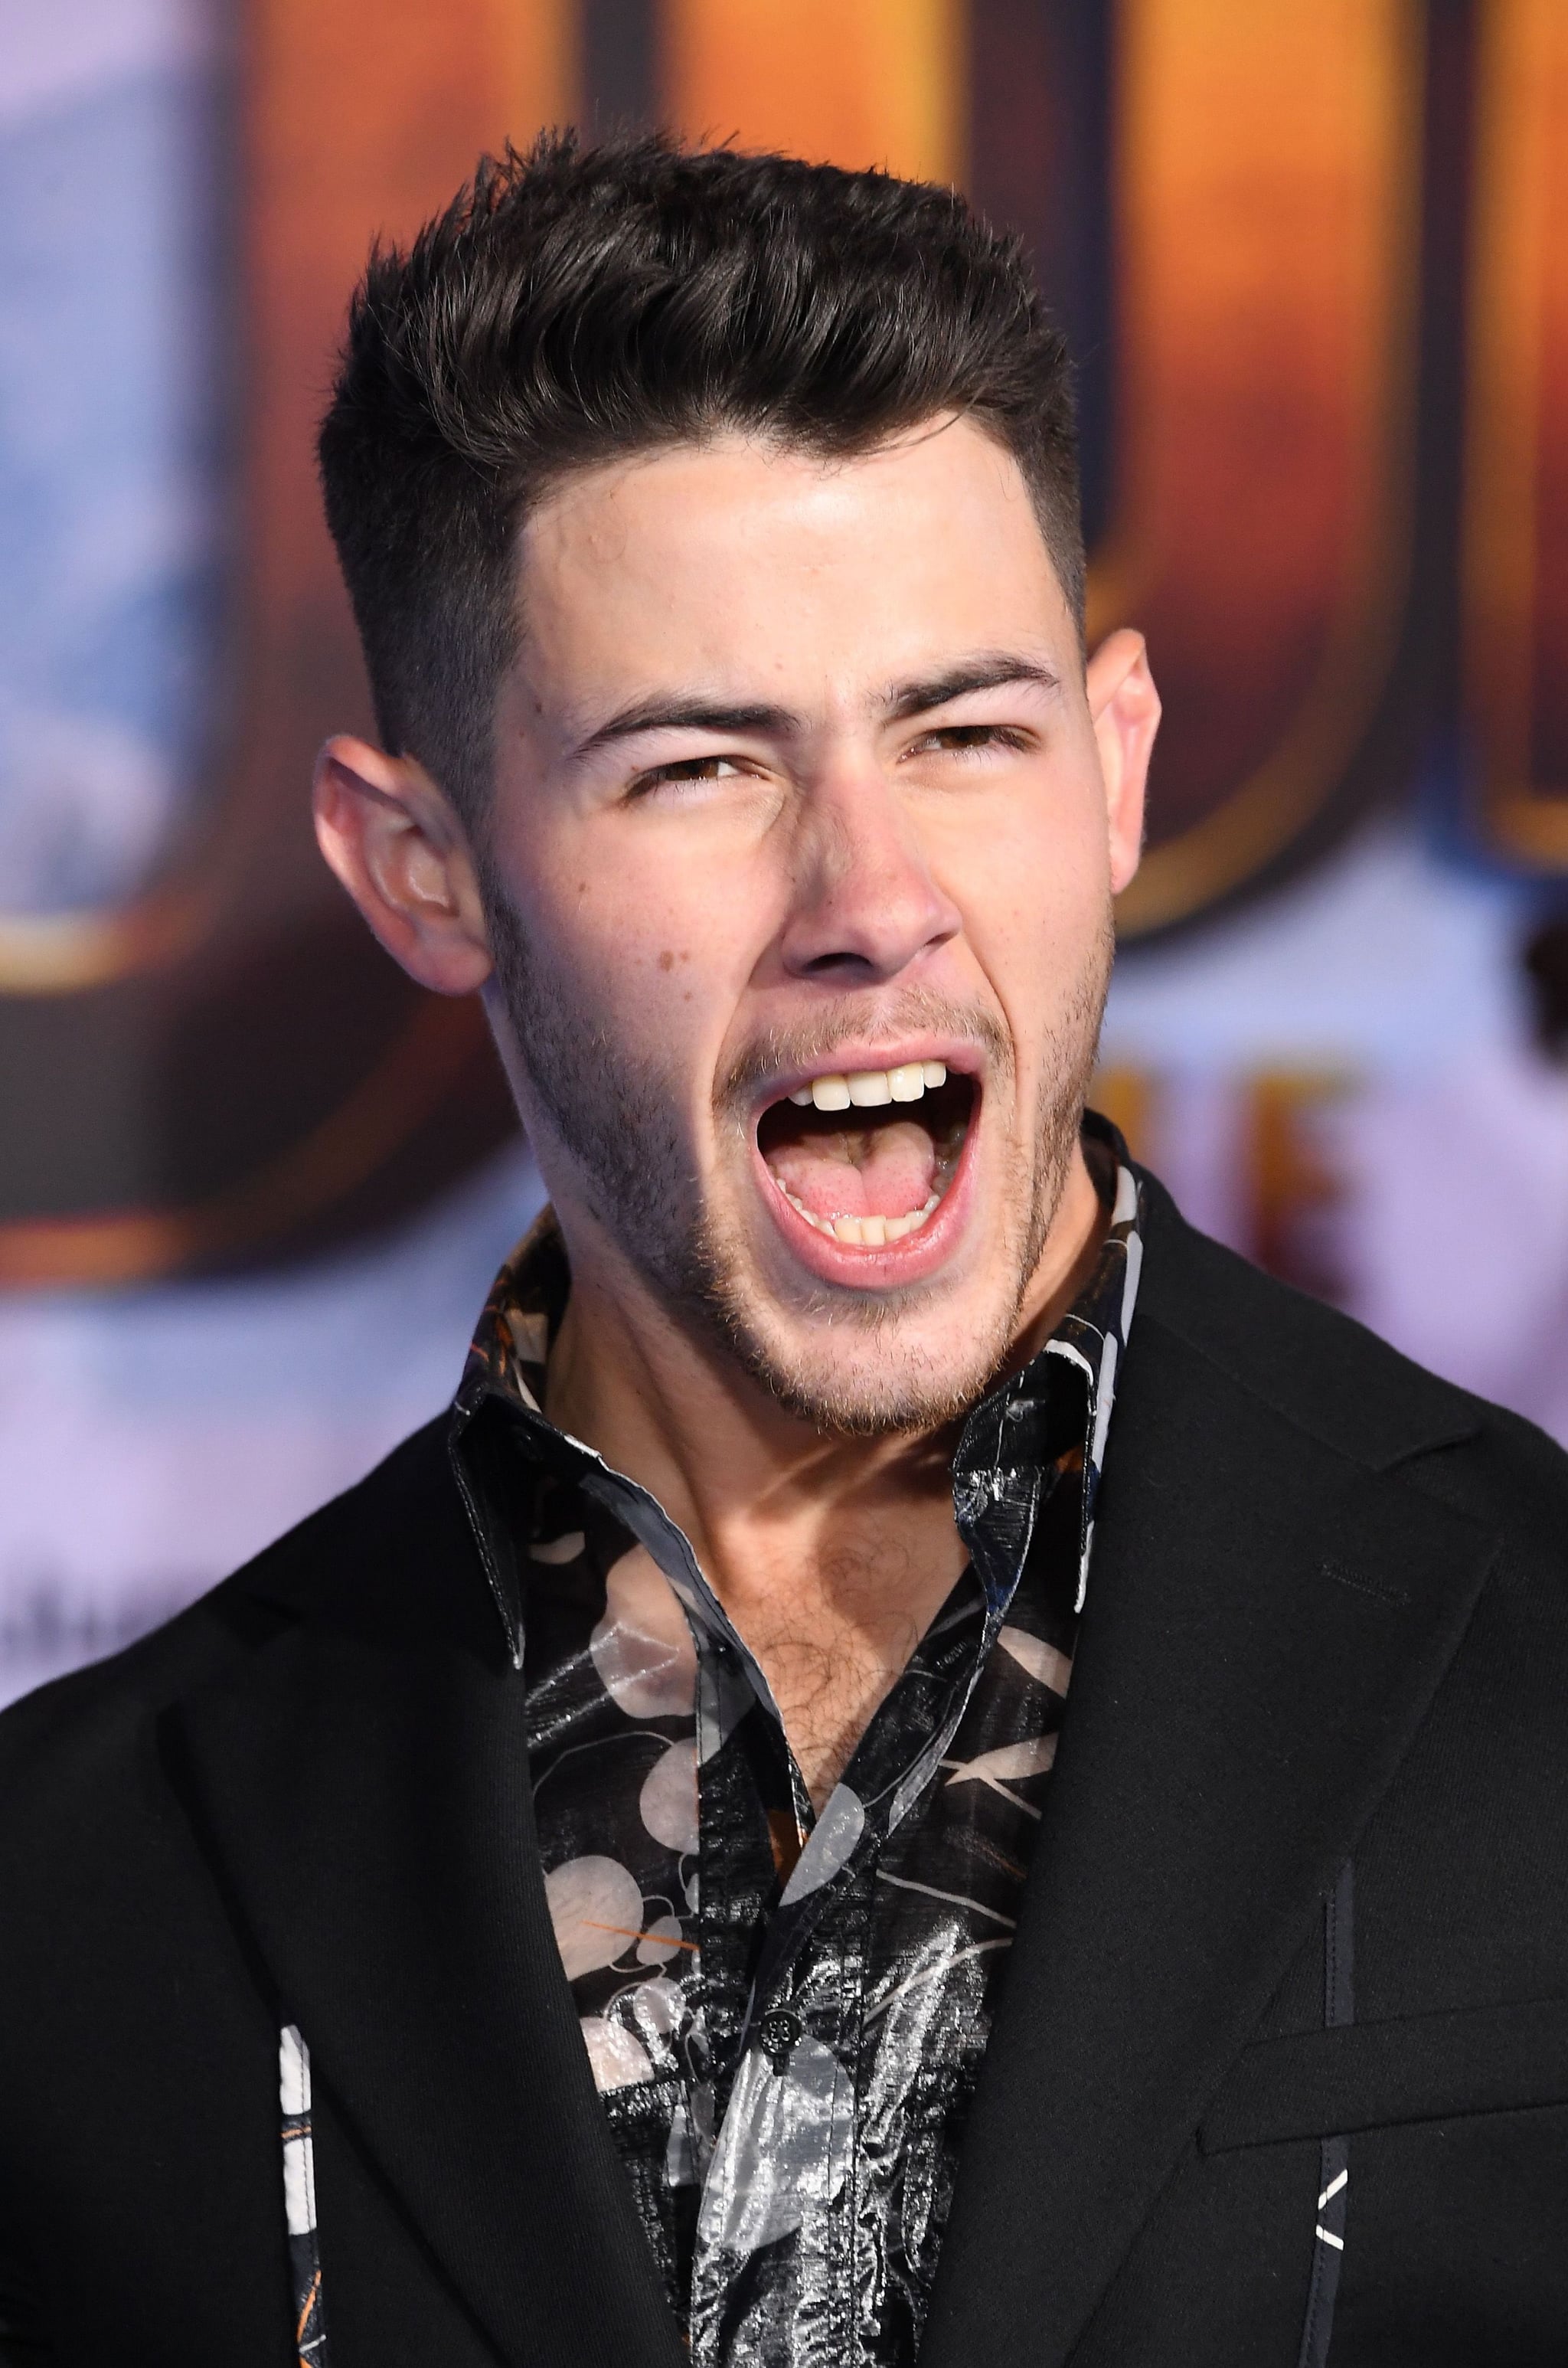 Nick Jonas Haircut 2019 - Men's Hairstyles & Haircuts 2019